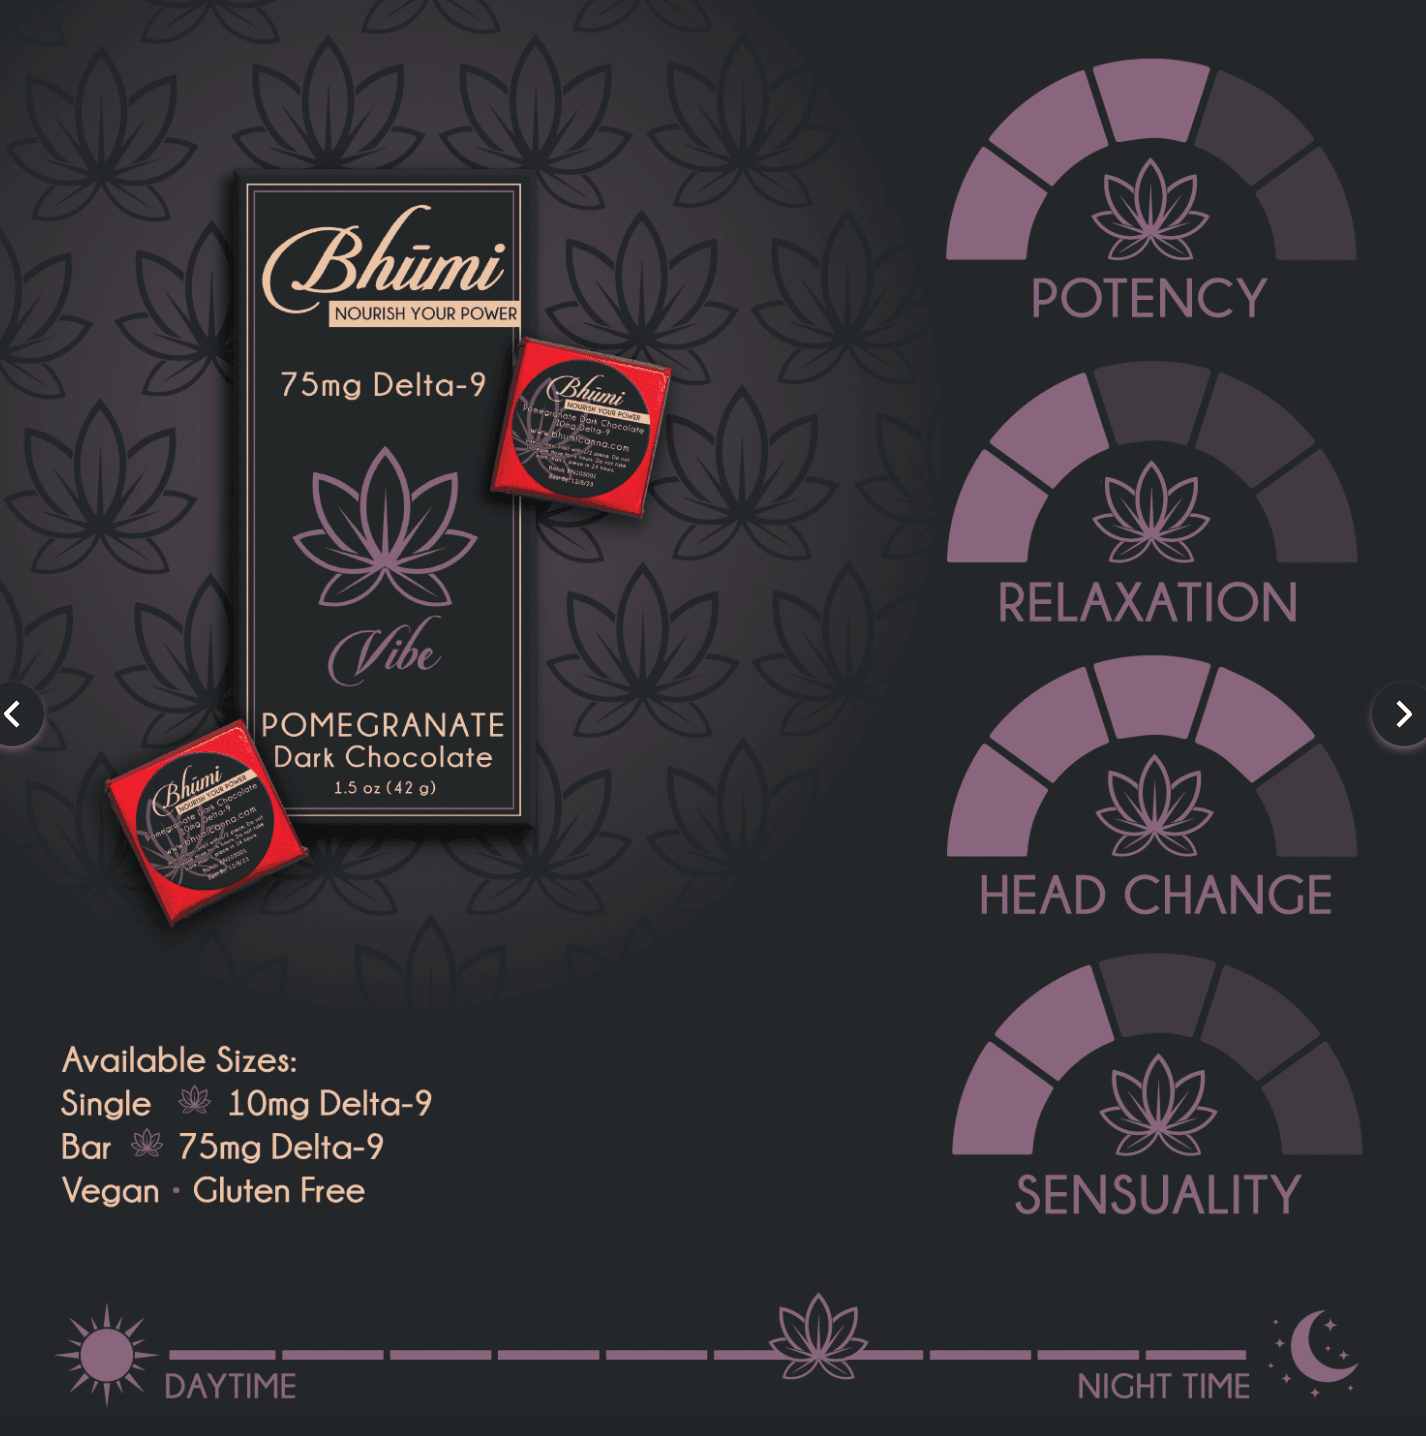 Bhumi Delta 9 Pomegranate Dark Chocolate Full Size Bar - KANNA